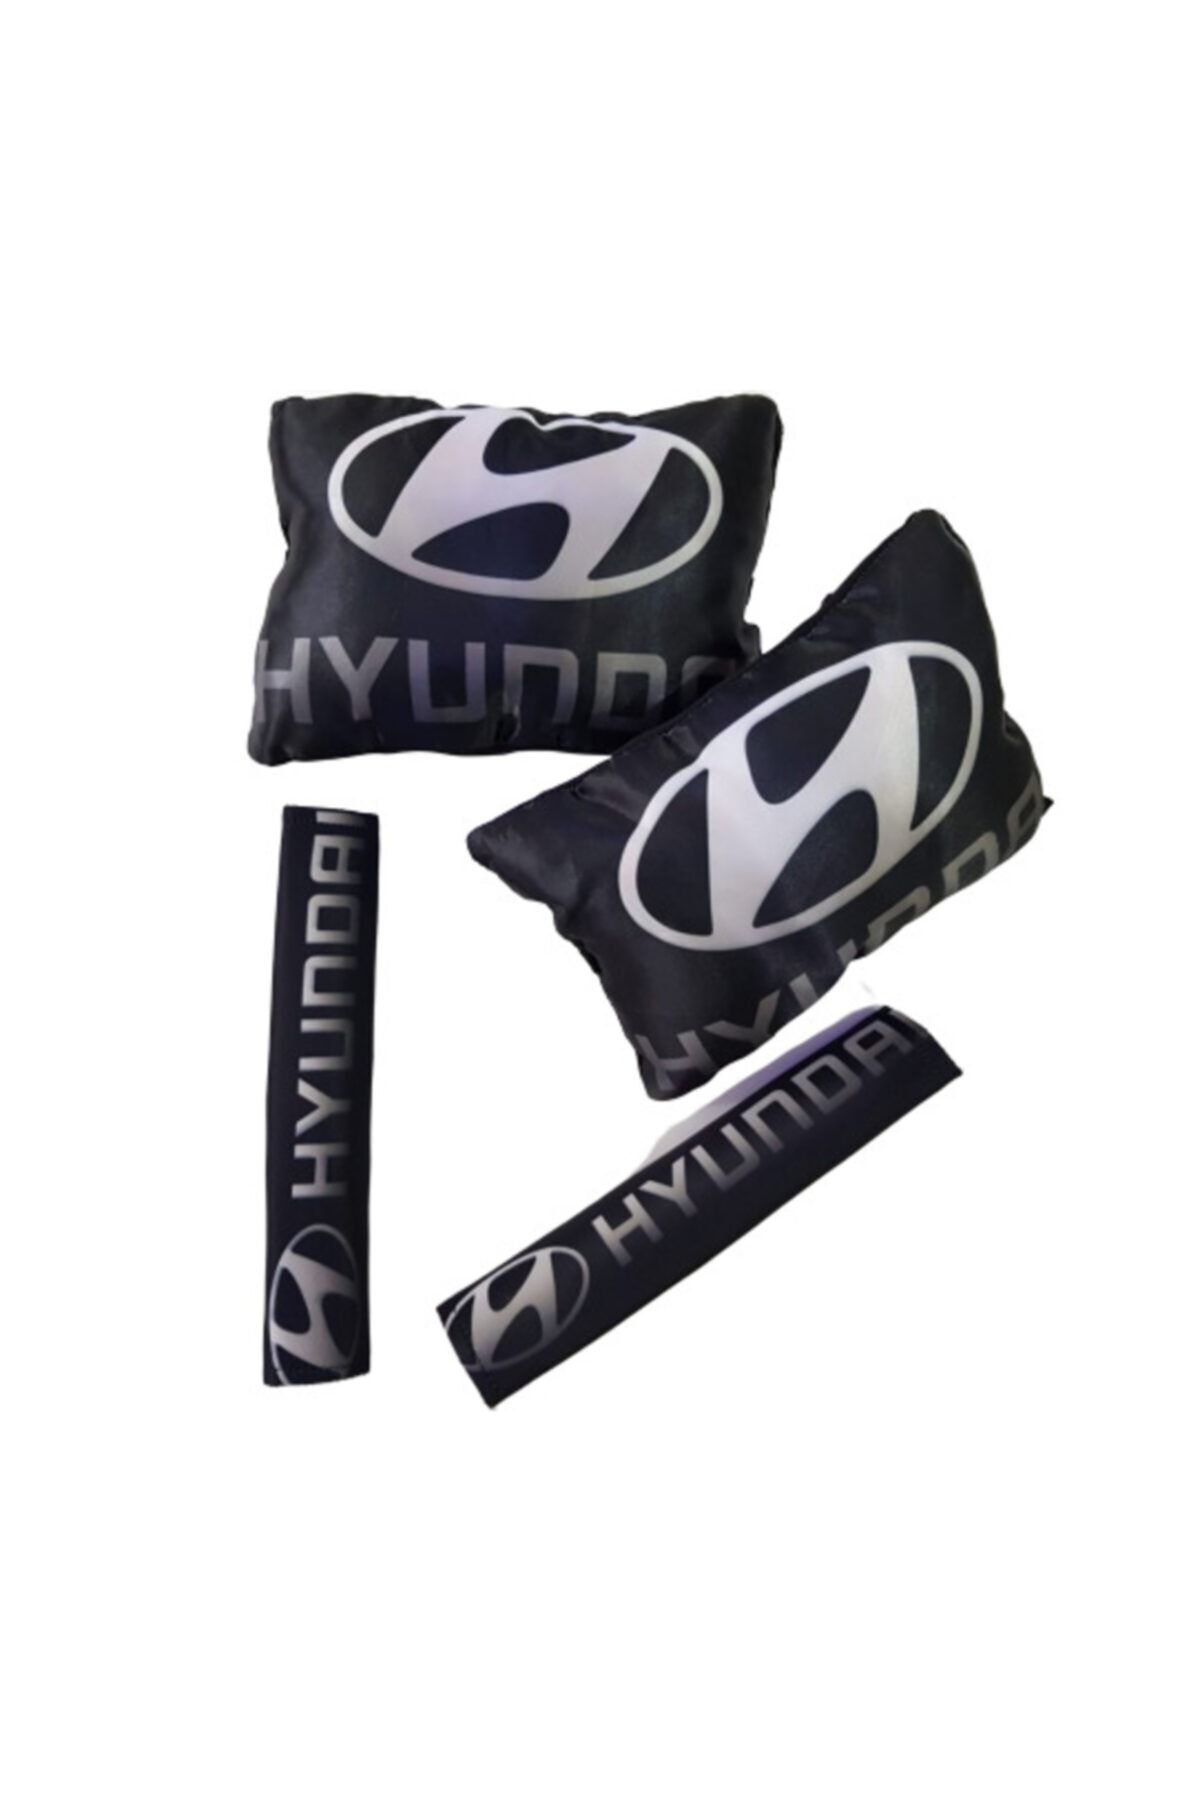 Hyundai Accent Blue Siyah Boyun Yastığı Kemer Konforu